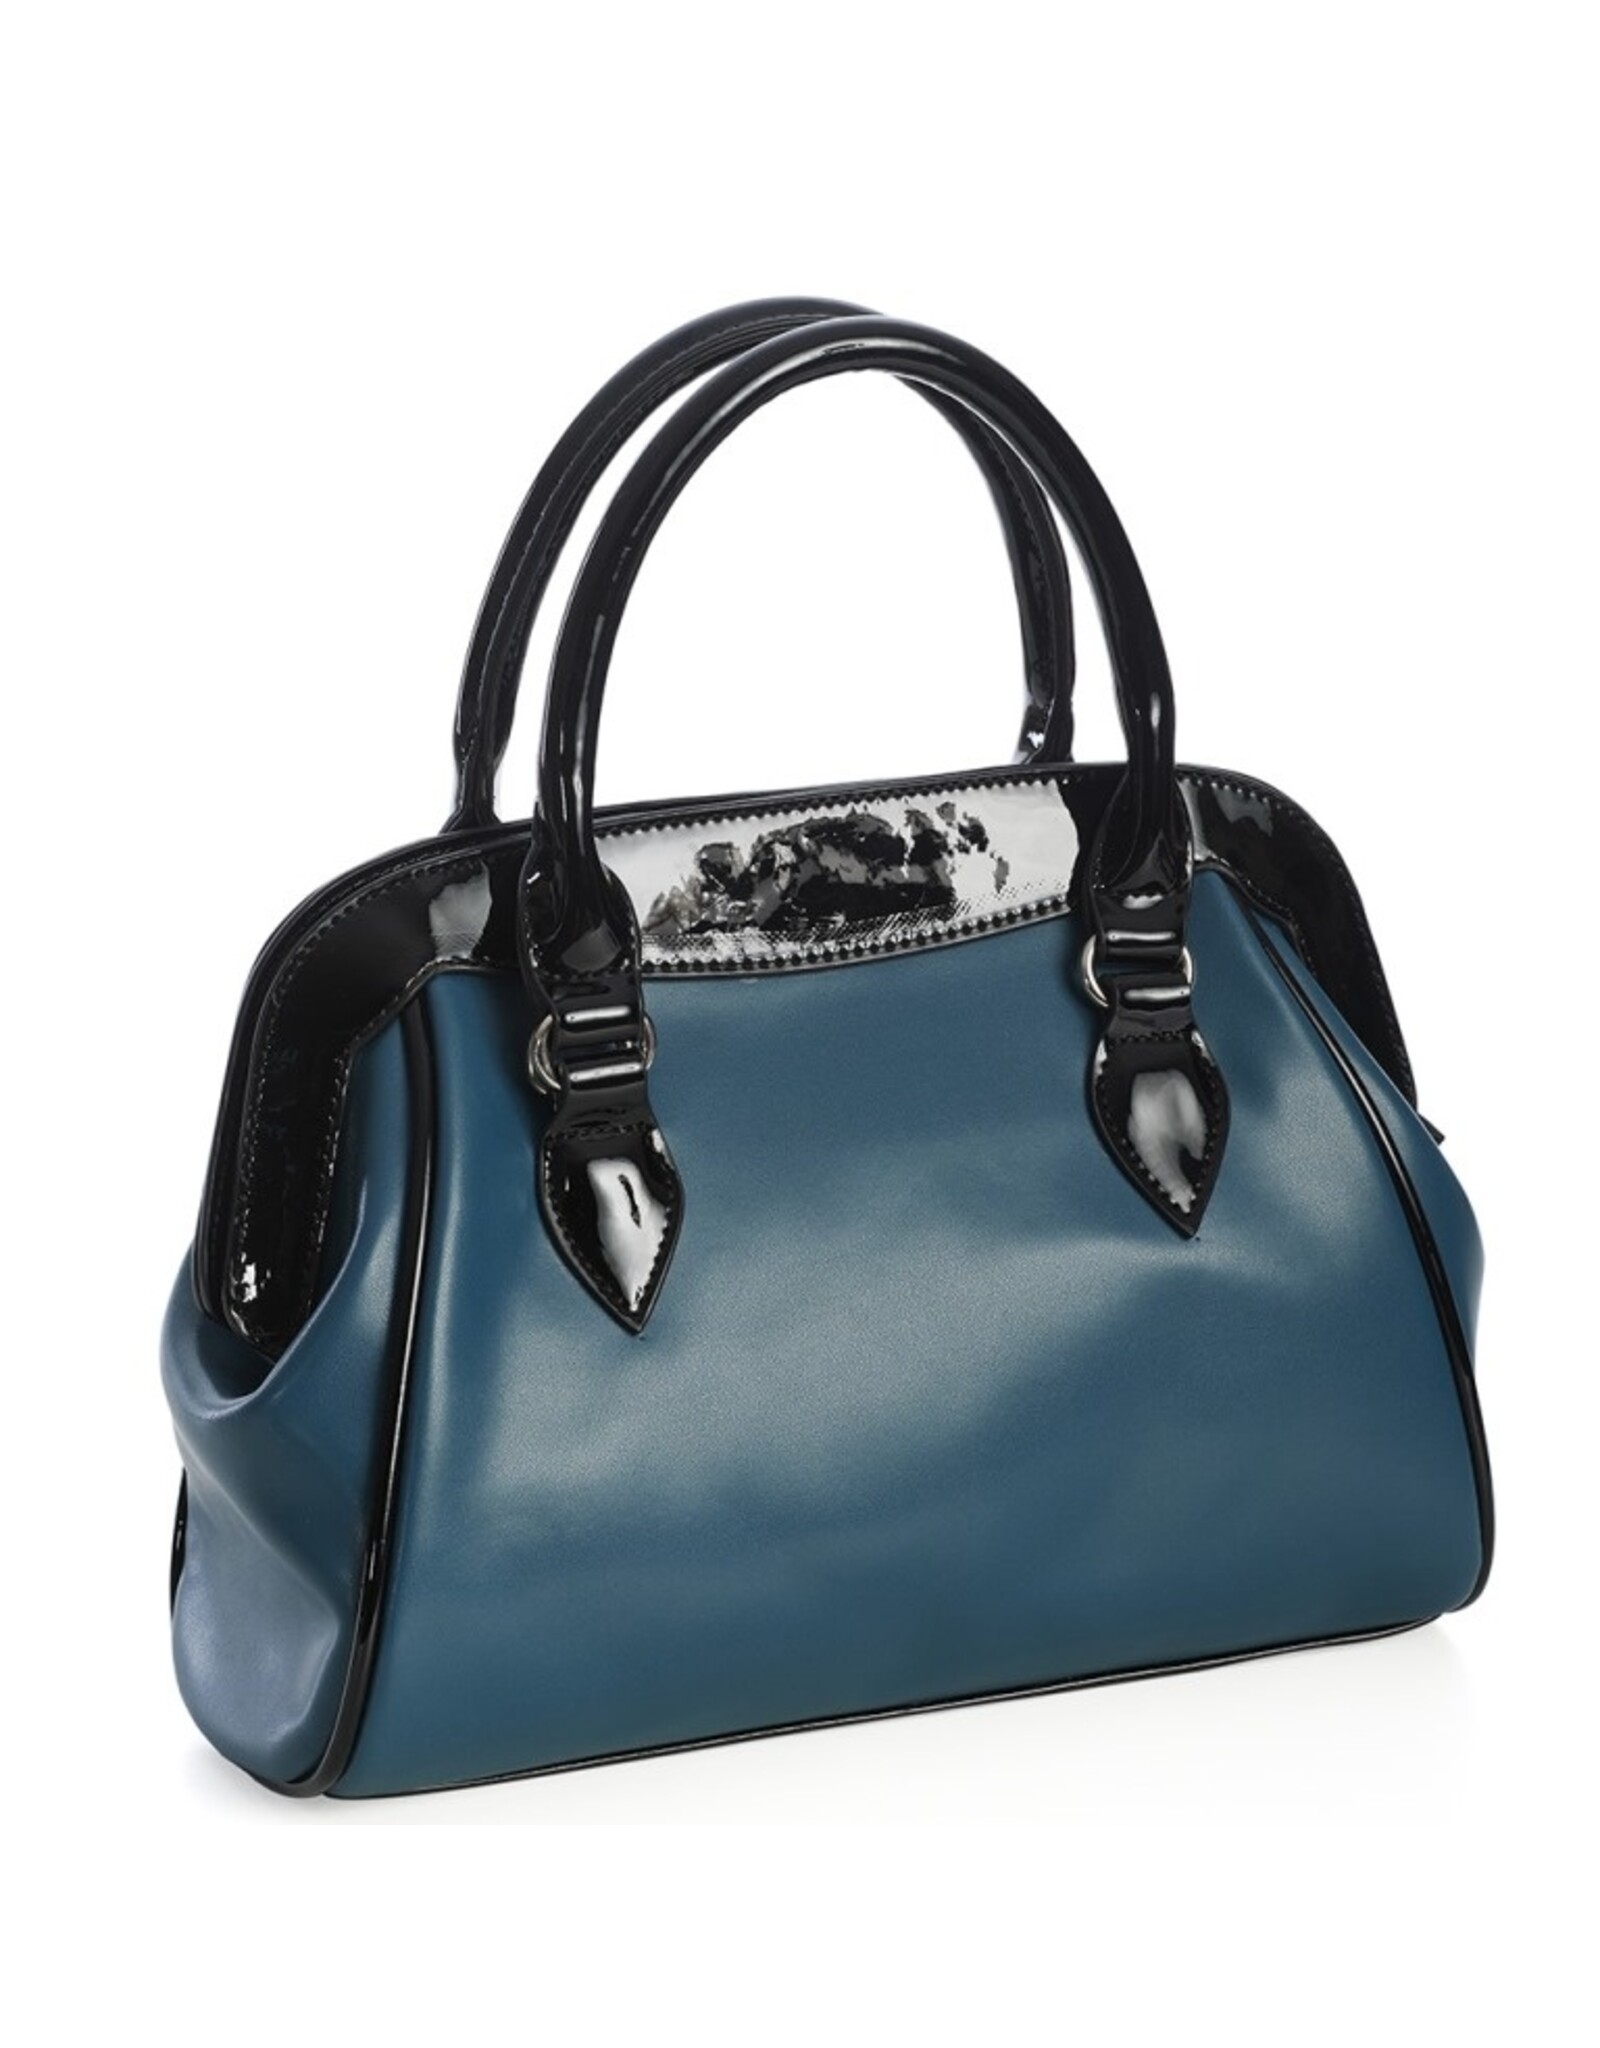 Banned Retro bags  Vintage bags - Banned Back to Business Retro handbag blue-black